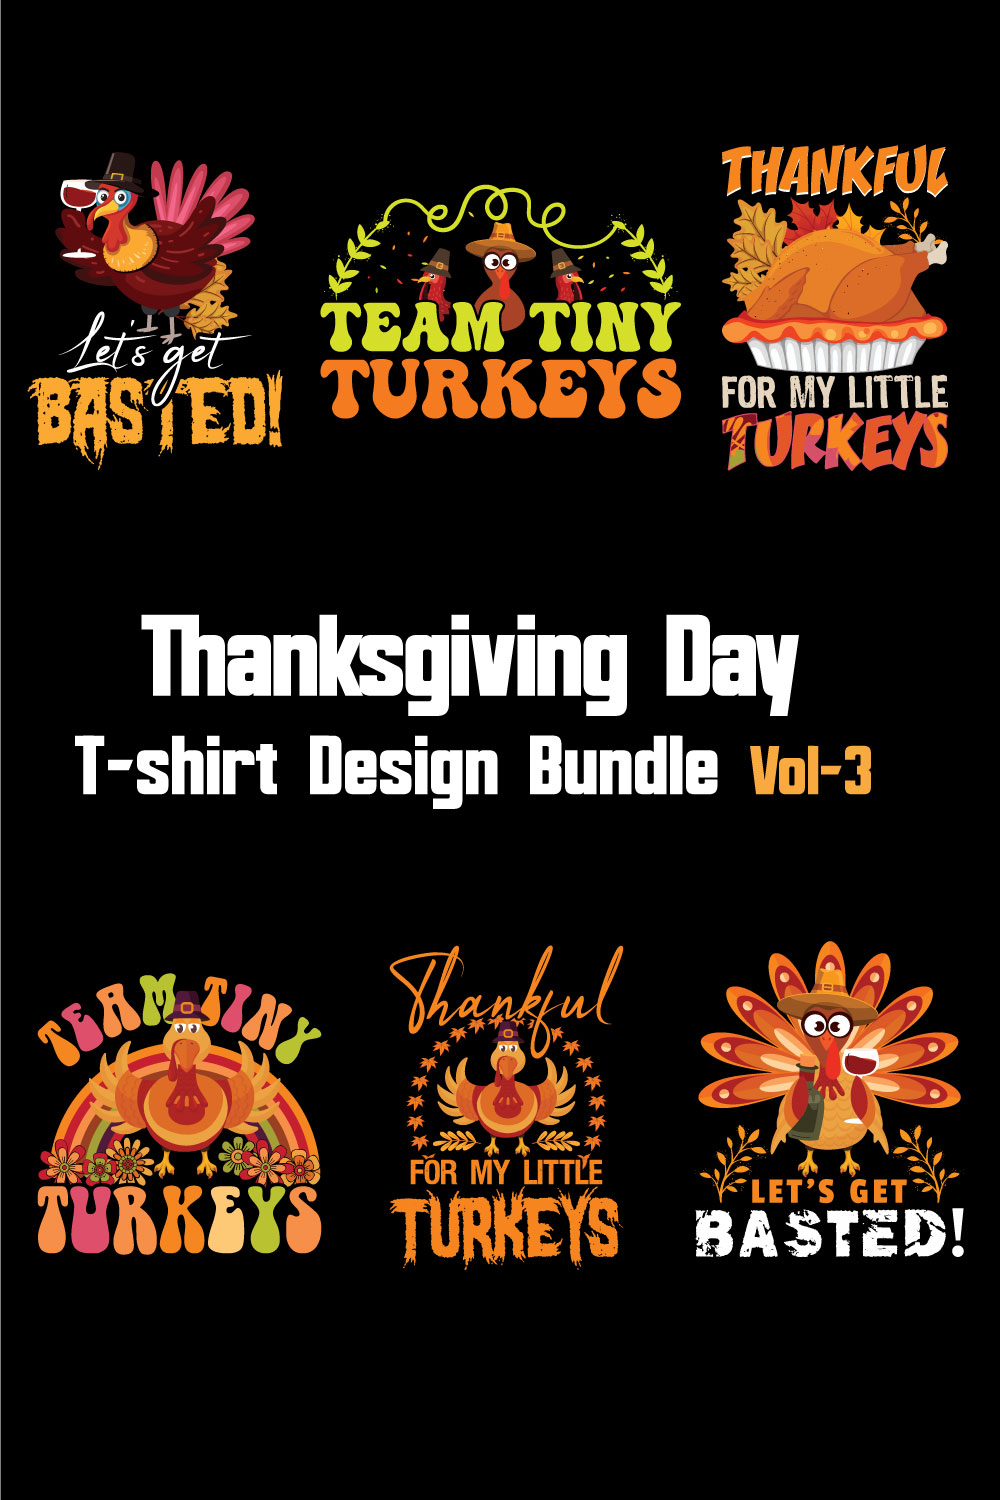 Thanksgiving Day T-shirt Design Bundle Vol-3 pinterest preview image.